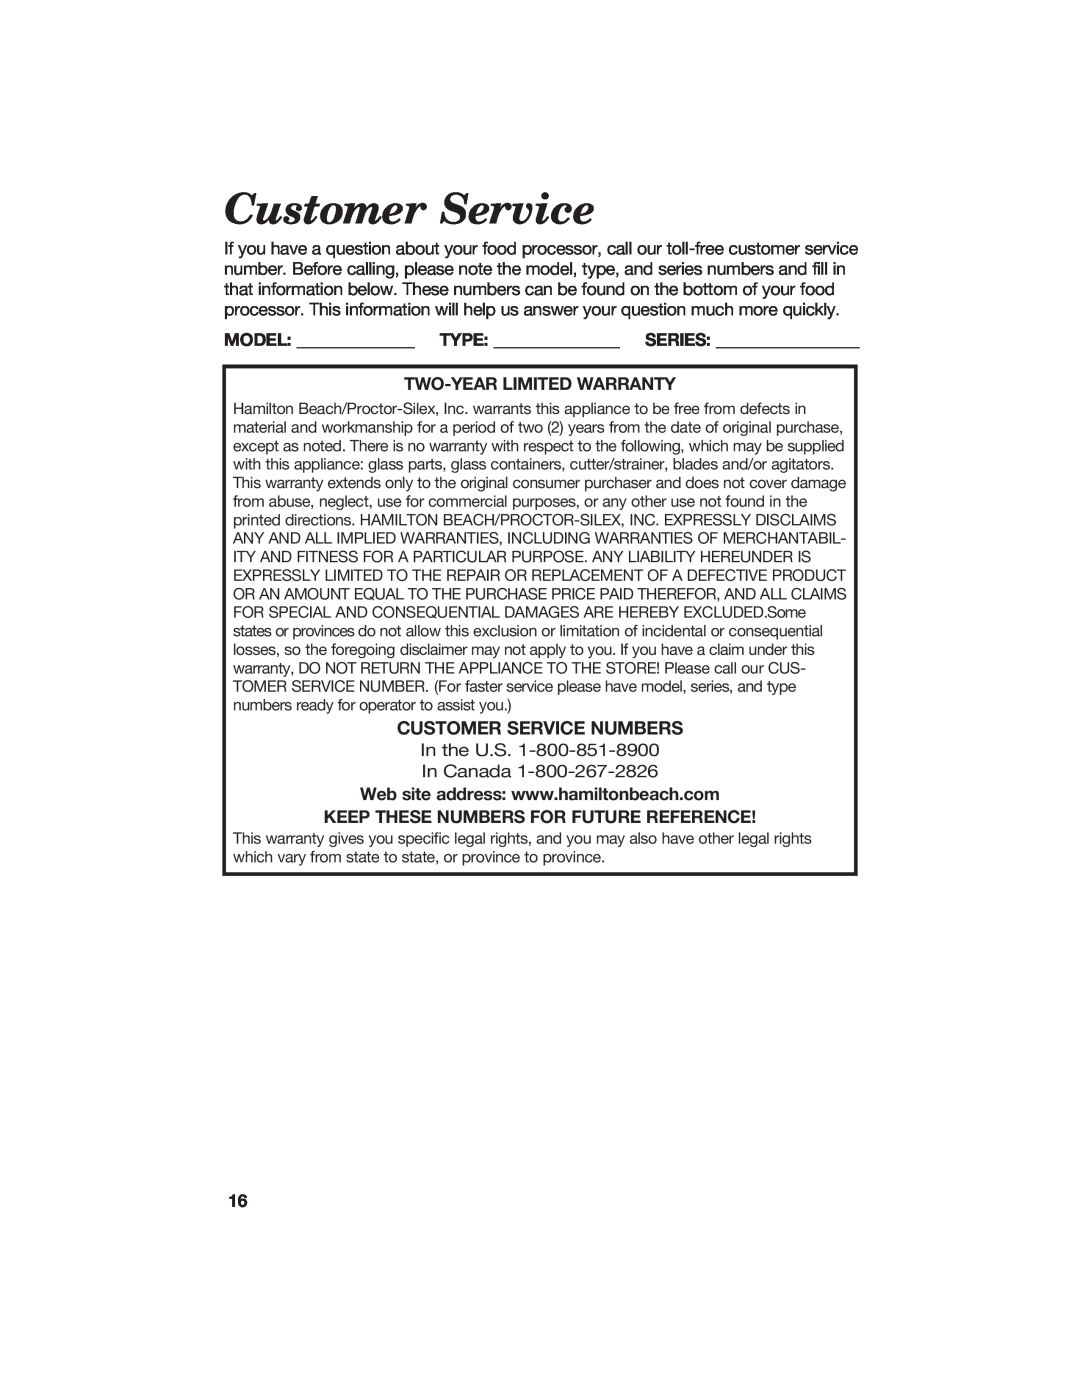 Hamilton Beach 840067300 manual Customer Service Numbers 